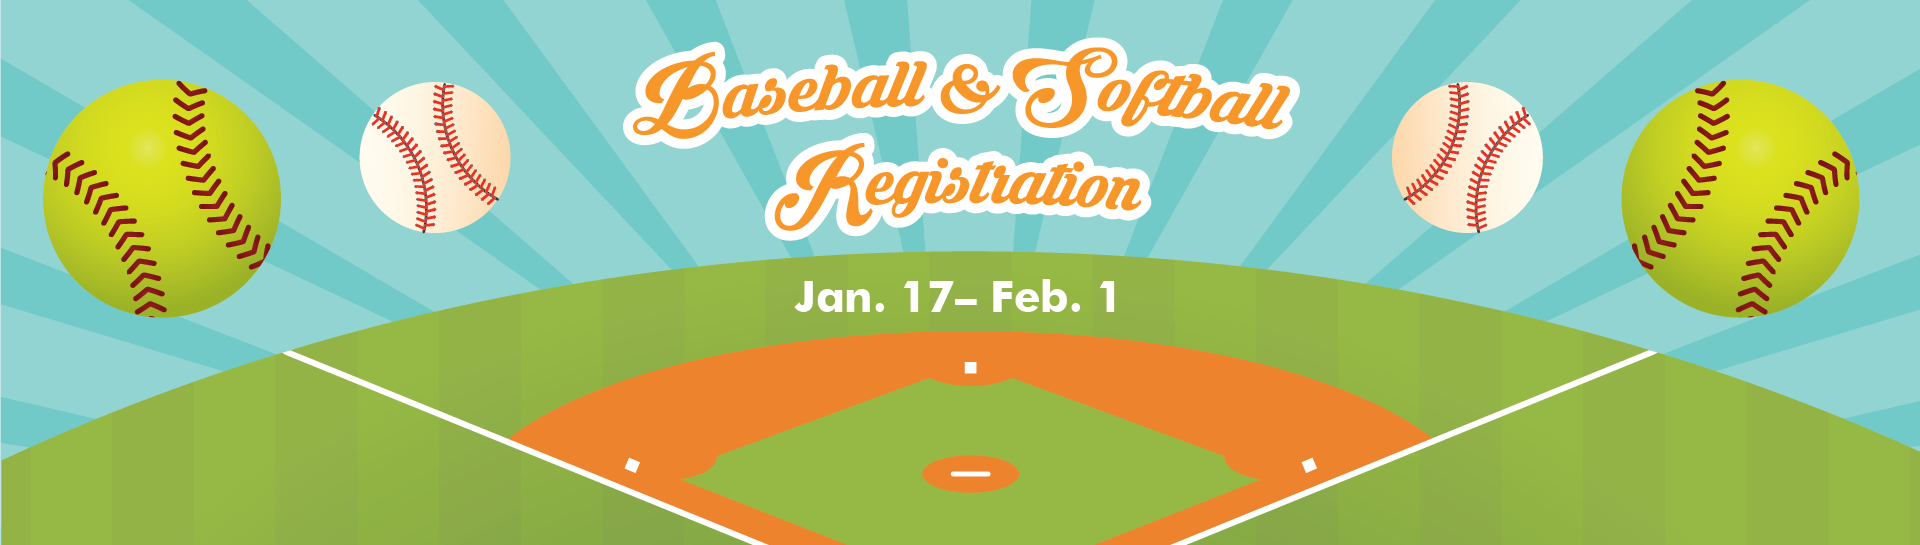 baseball-softball registration